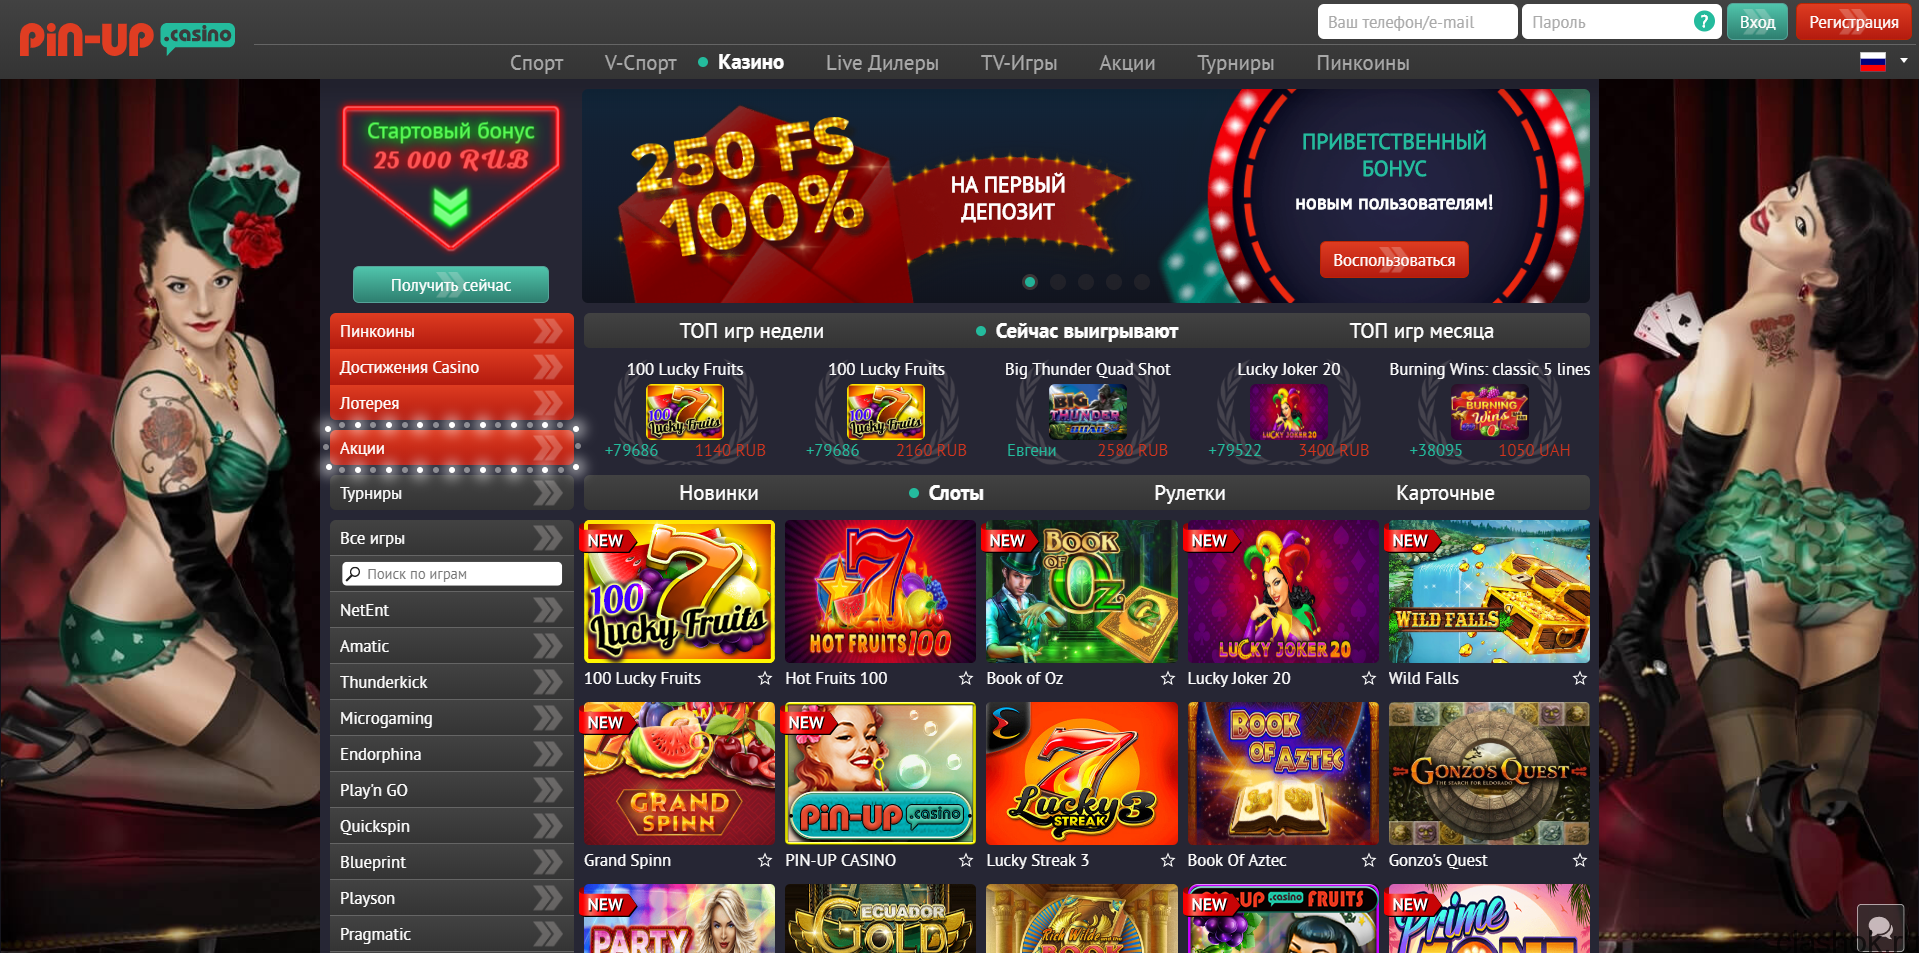 Pin up casino официальный сайт com казино онлайн фортуна бездепозитный бонус